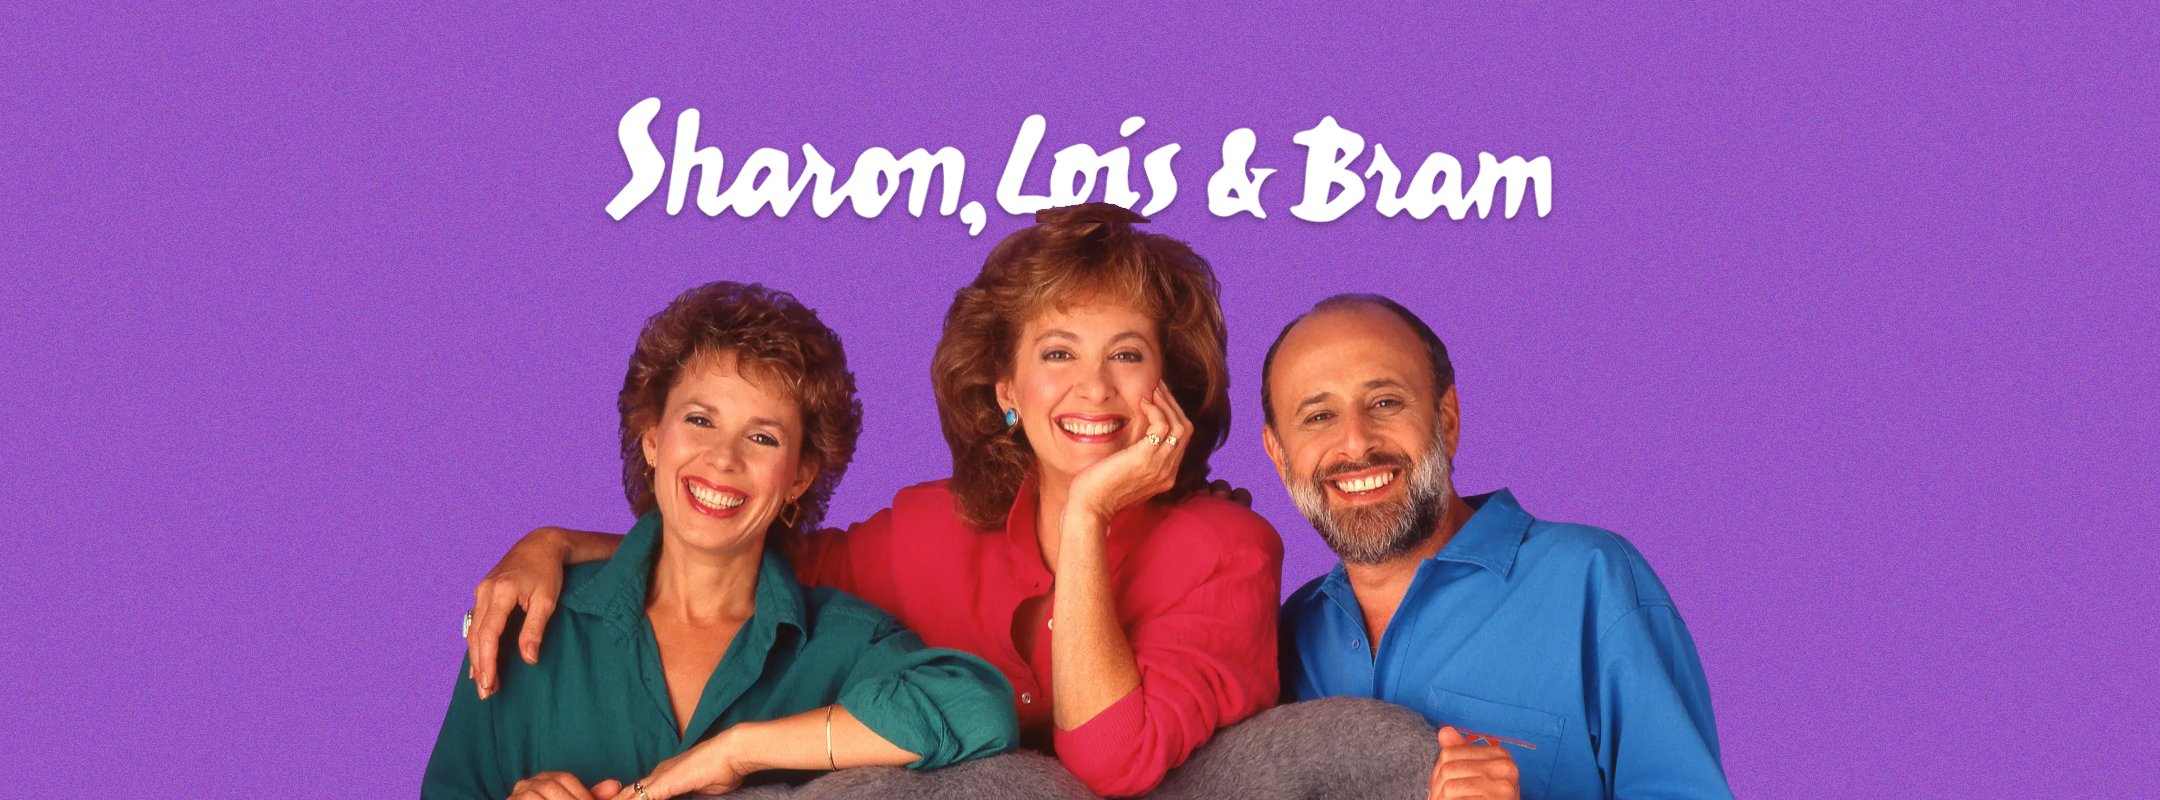 Sharon, Lois & Bram